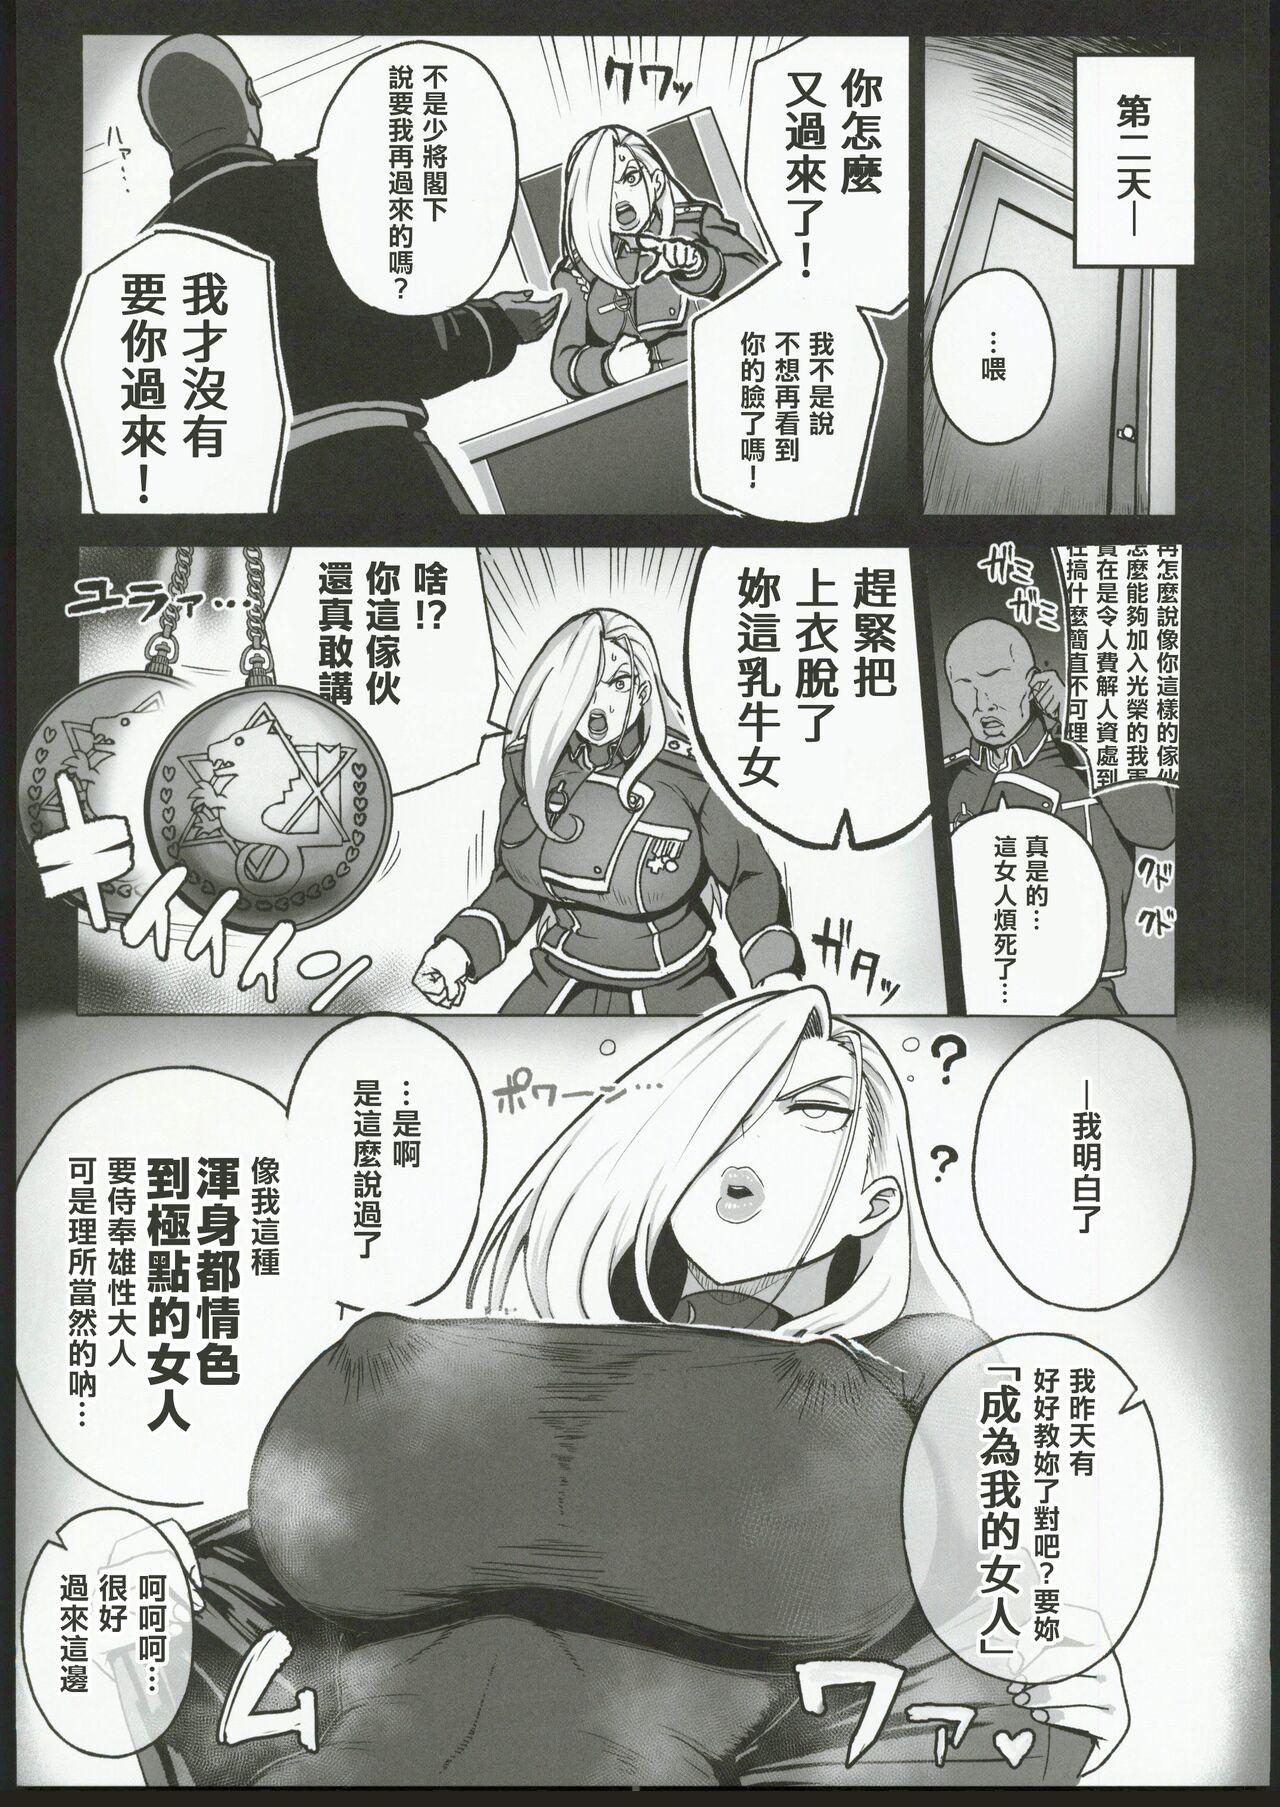 Tugging Jukujo Shougun VS Saimin no Renkinjutsushi - Armstrong VS Hypnotic Alchemist - Fullmetal alchemist | hagane no renkinjutsushi Naked Sluts - Page 8